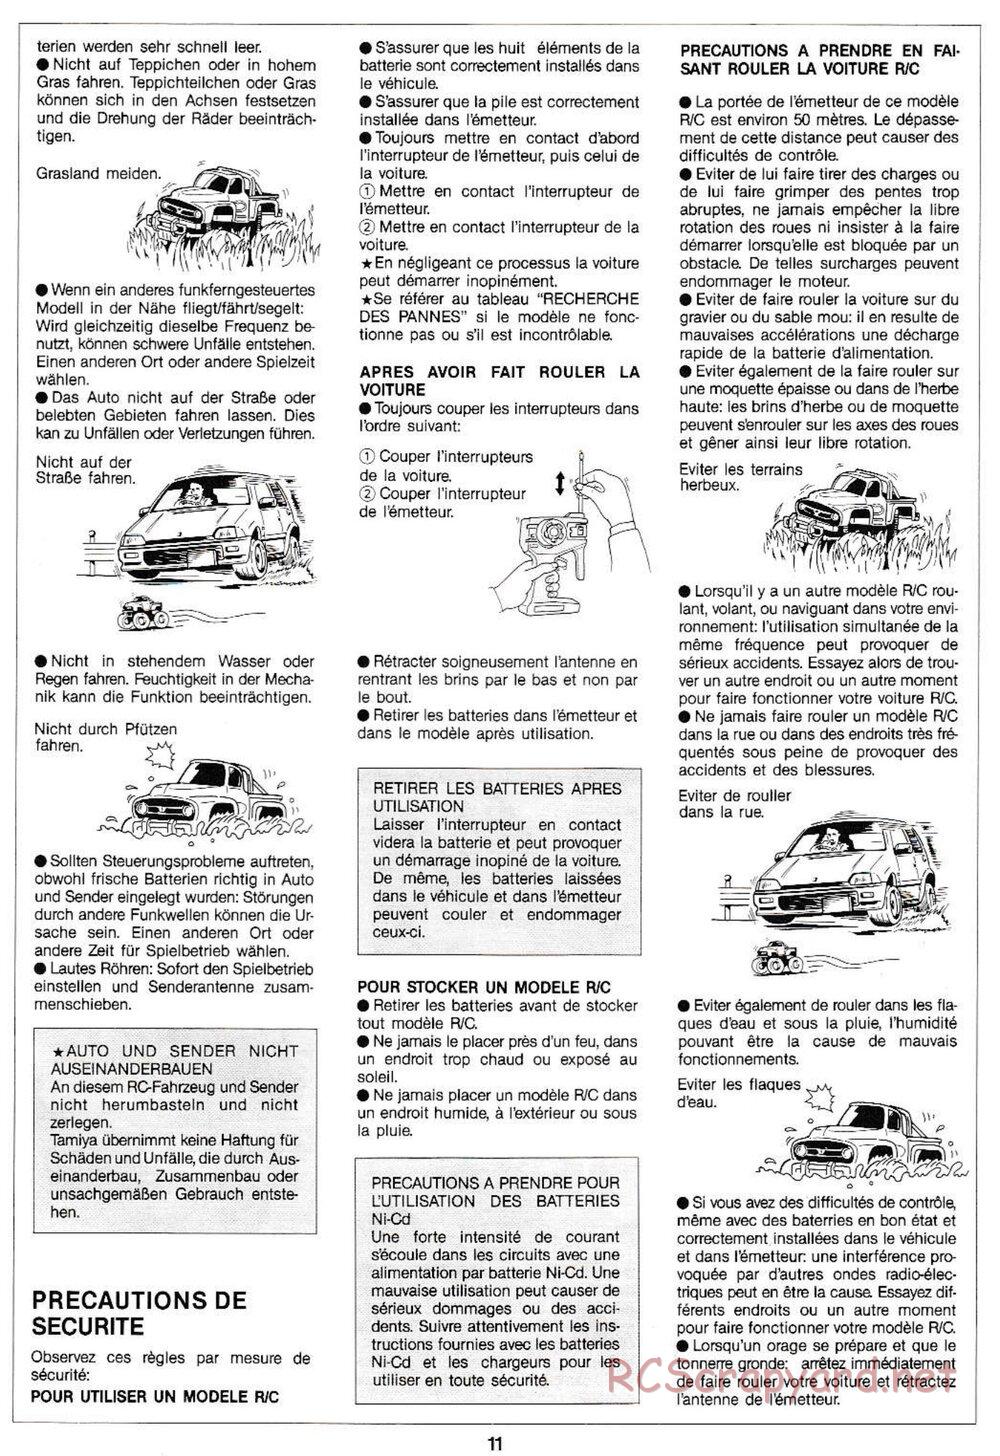 Tamiya - Midnight Pumpkin QD Chassis - Manual - Page 11